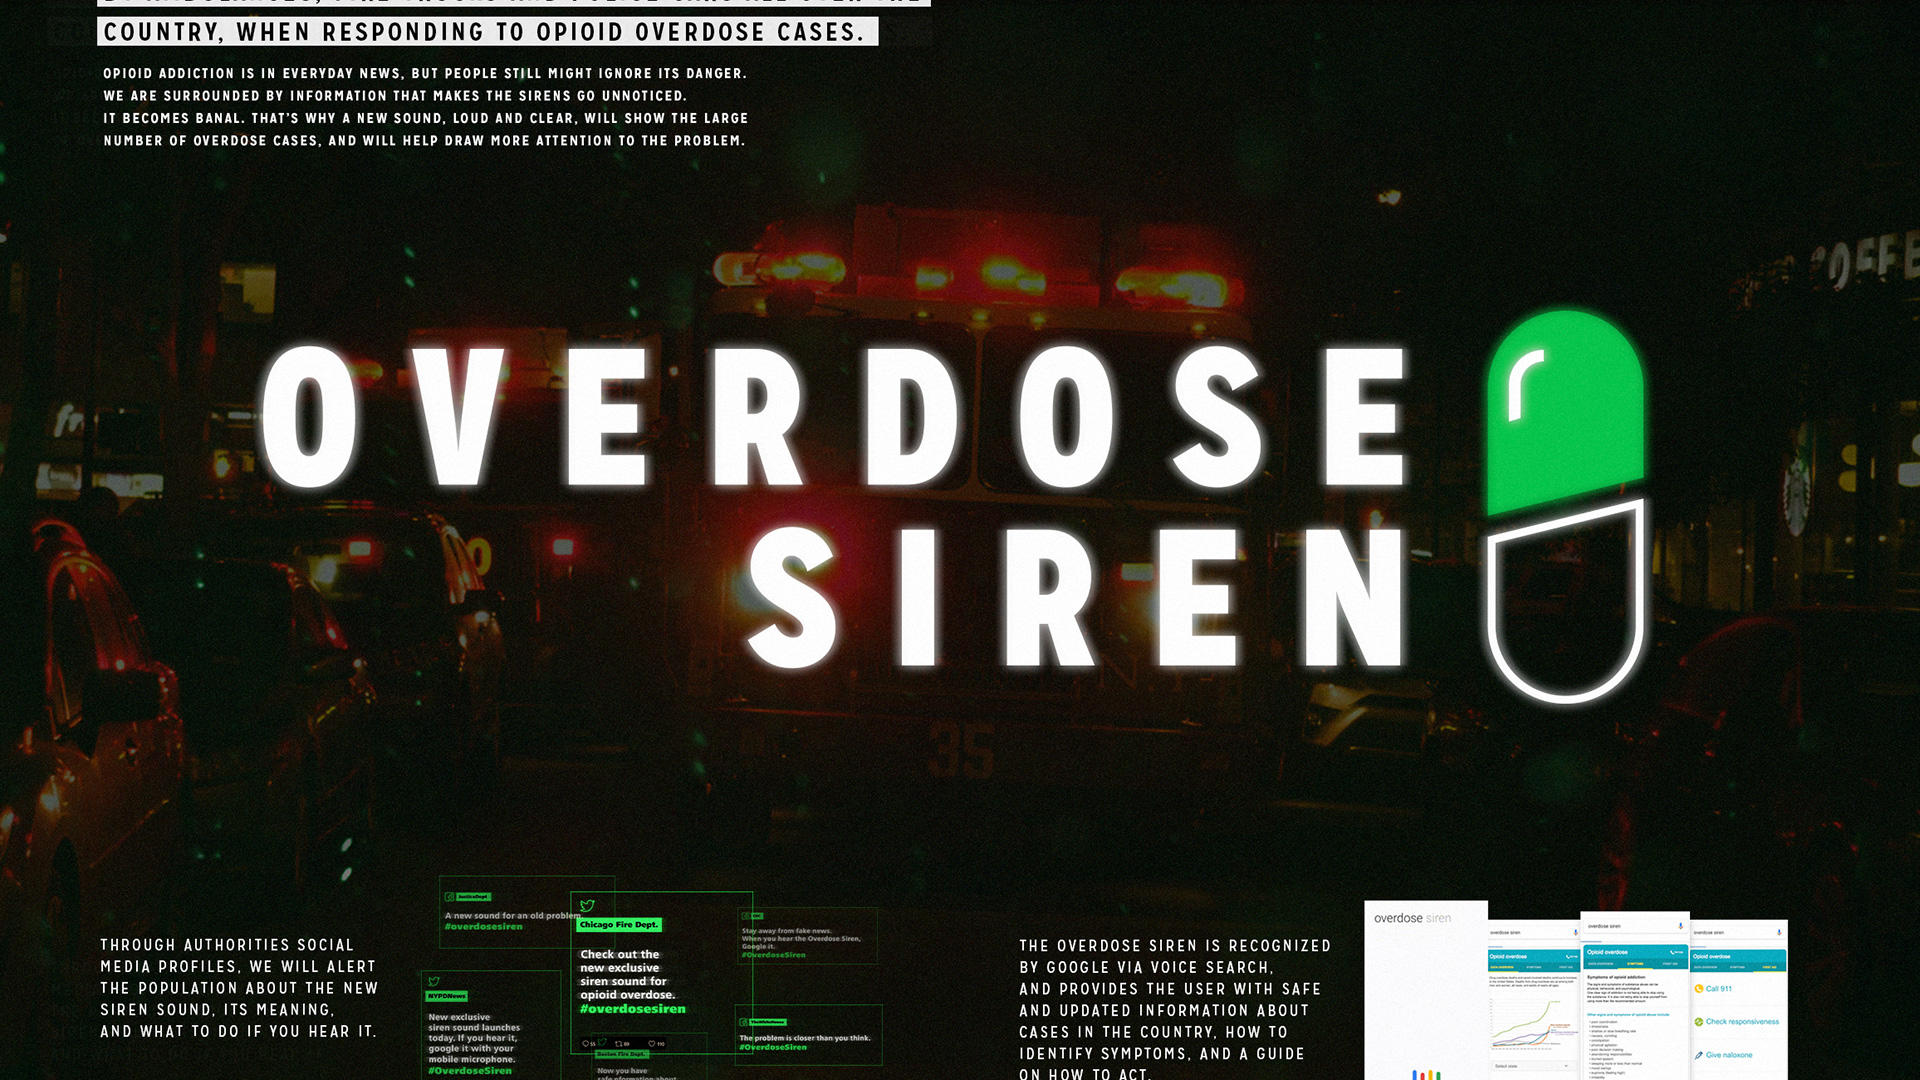 Overdose Siren